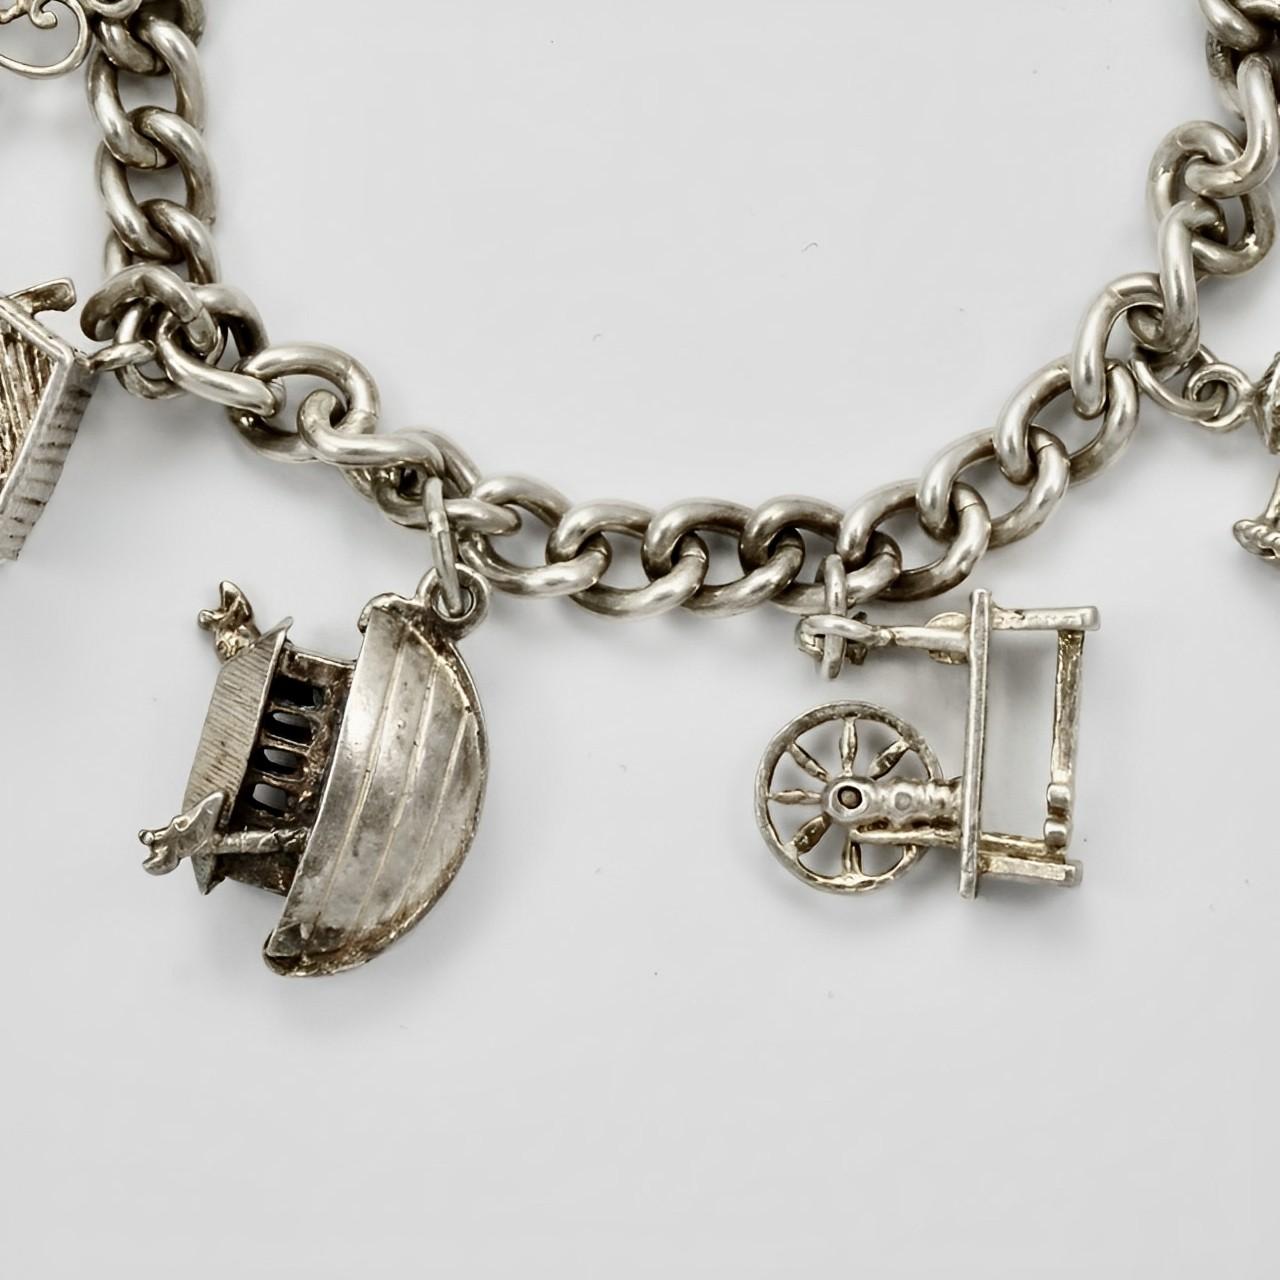 1970s silver charm bracelet